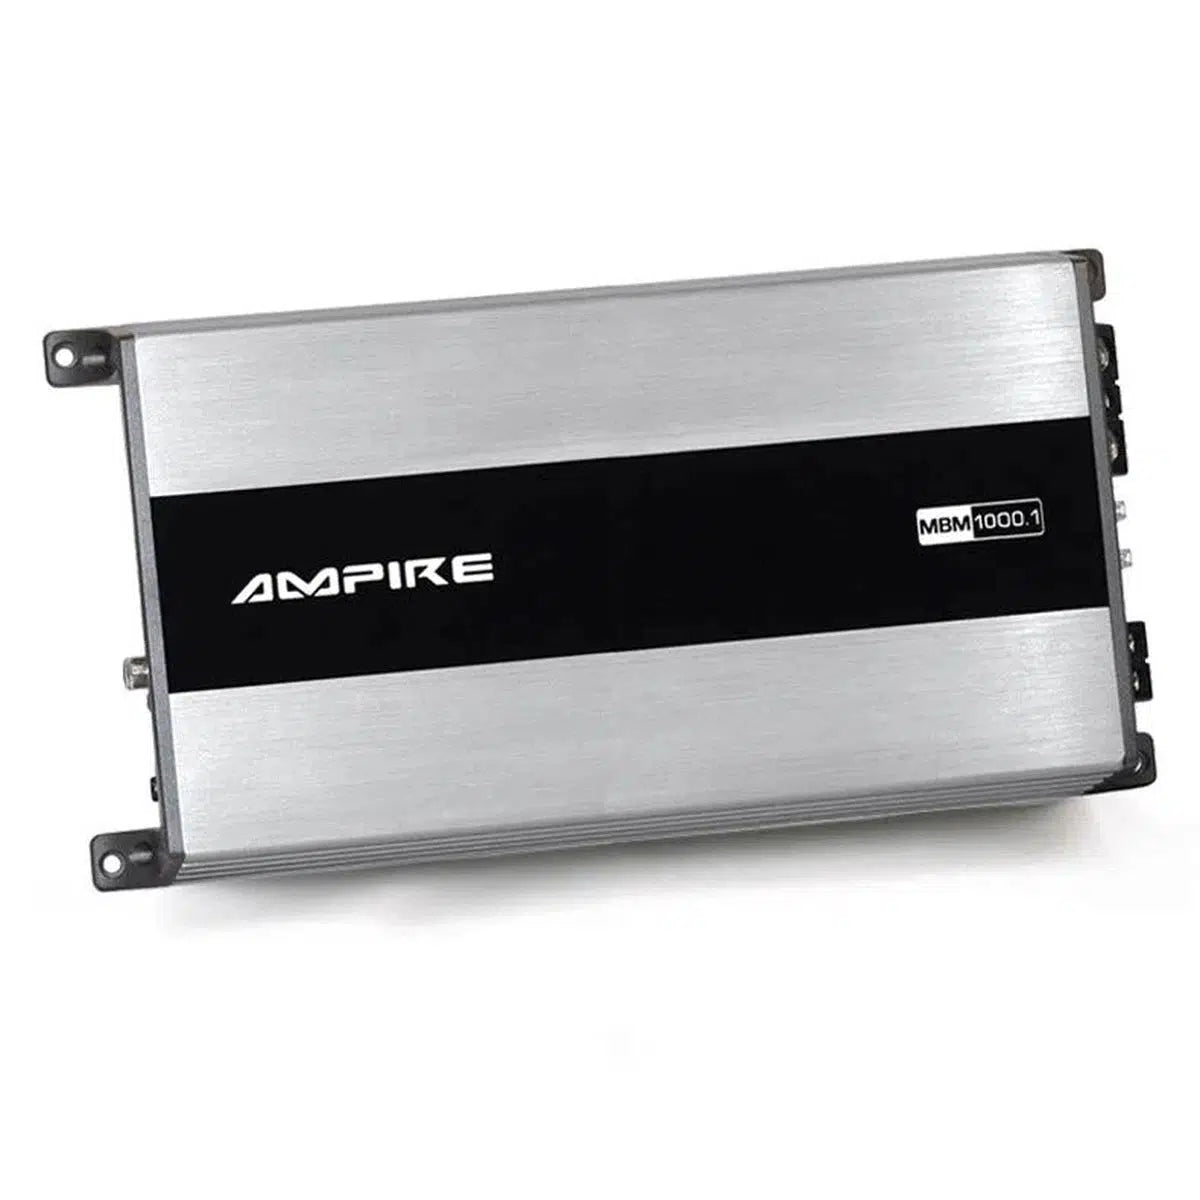 Ampire-MBM1000.1-2G-1-Channel Amplifier-Masori.de